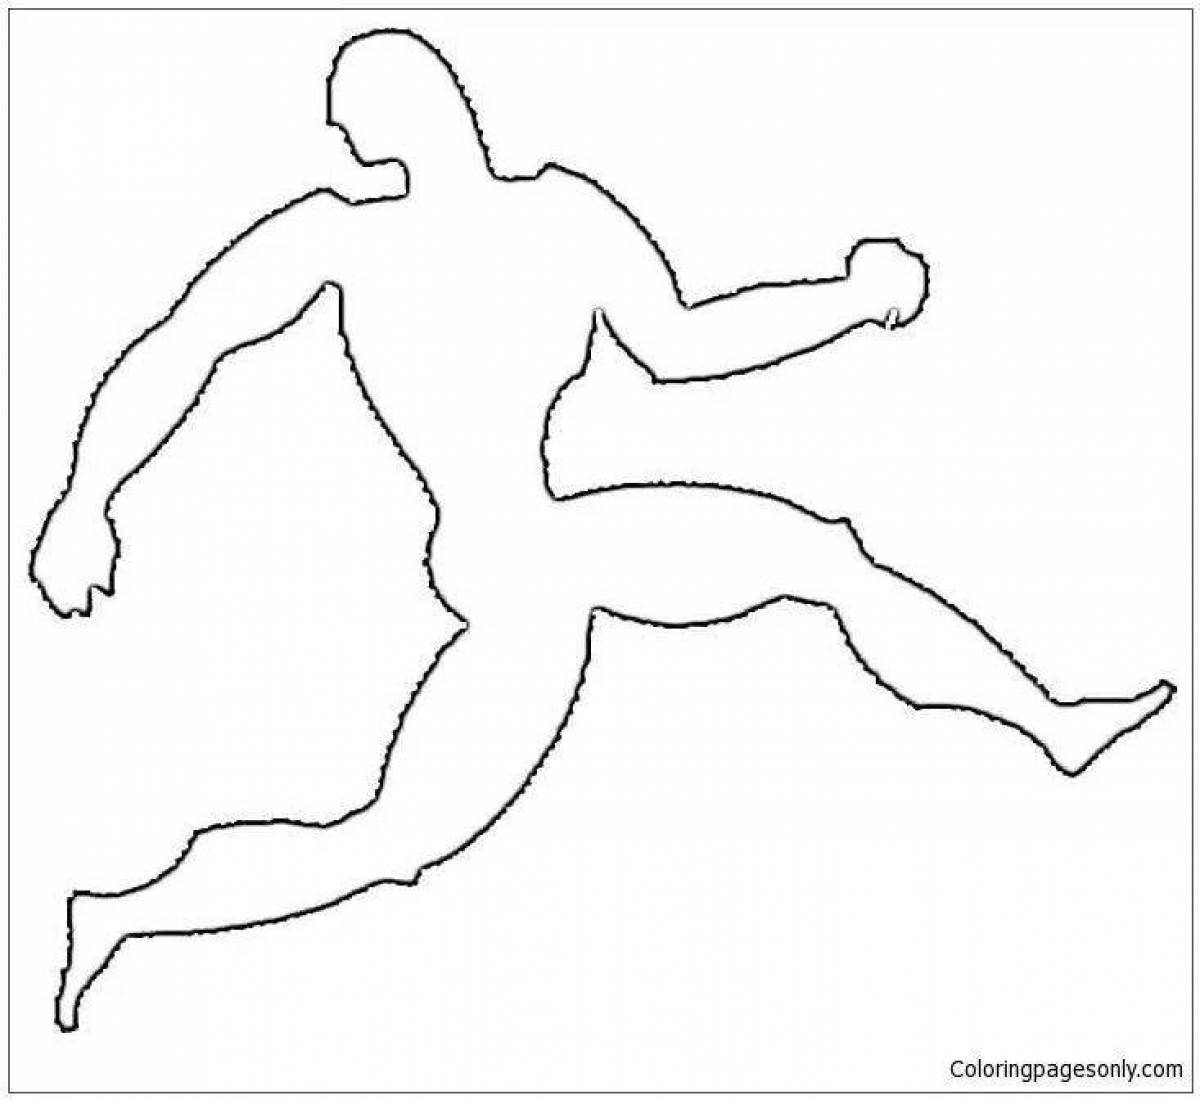 Human dynamic running